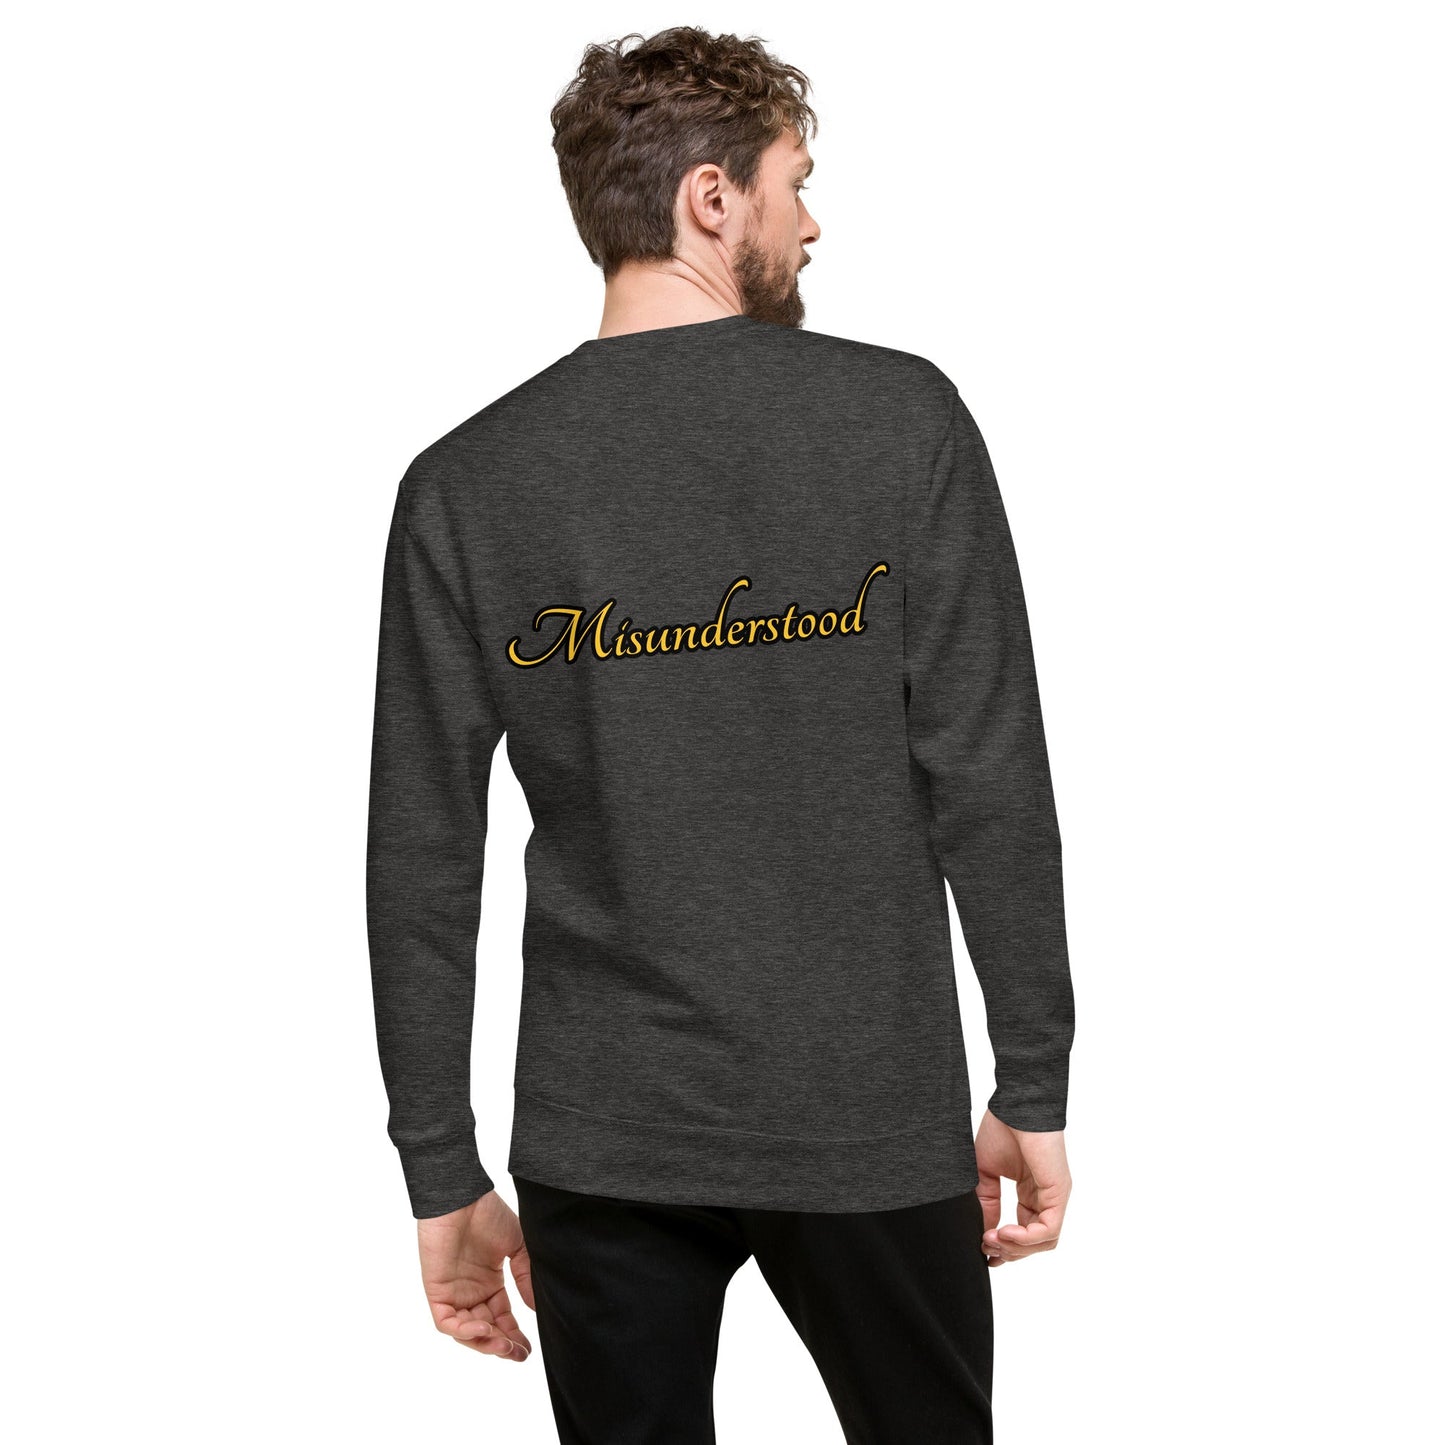 Misunderstood Unisex Premium Sweatshirt - Charcoal Heather - Weirdly Sensational